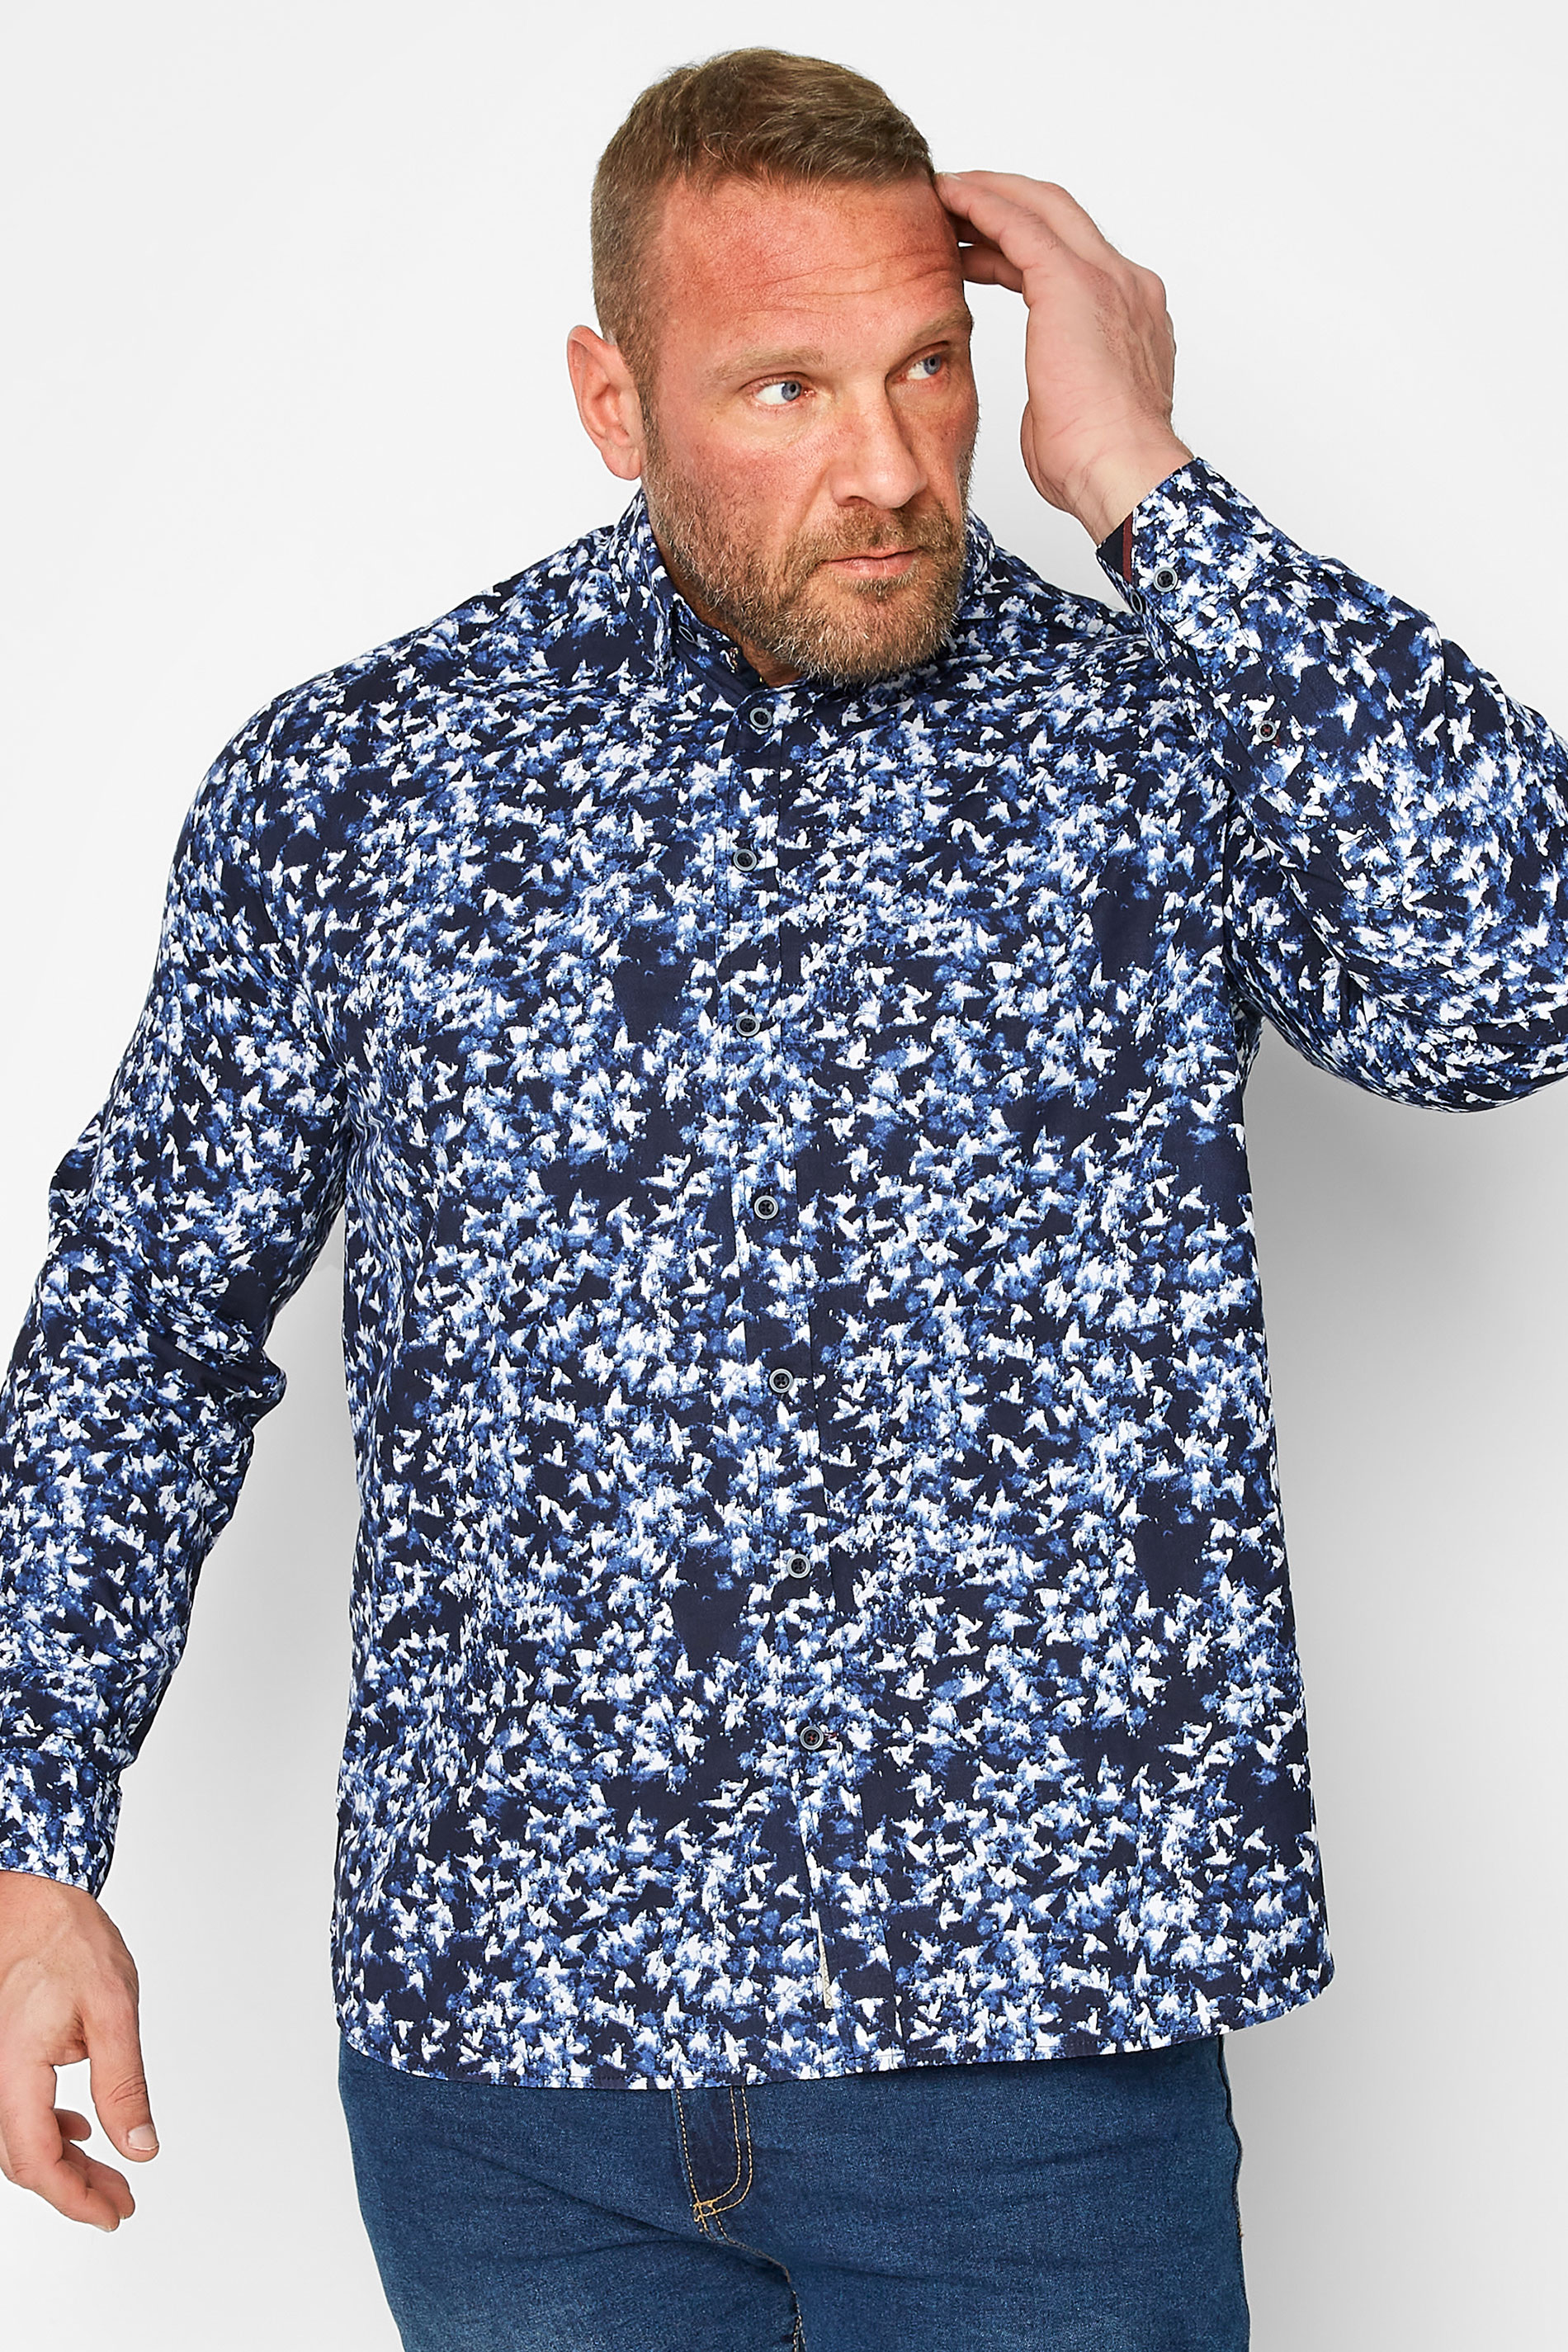 D555 Big & Tall Navy Blue Abstract Floral Print Long Sleeve Shirt| BadRhino 1